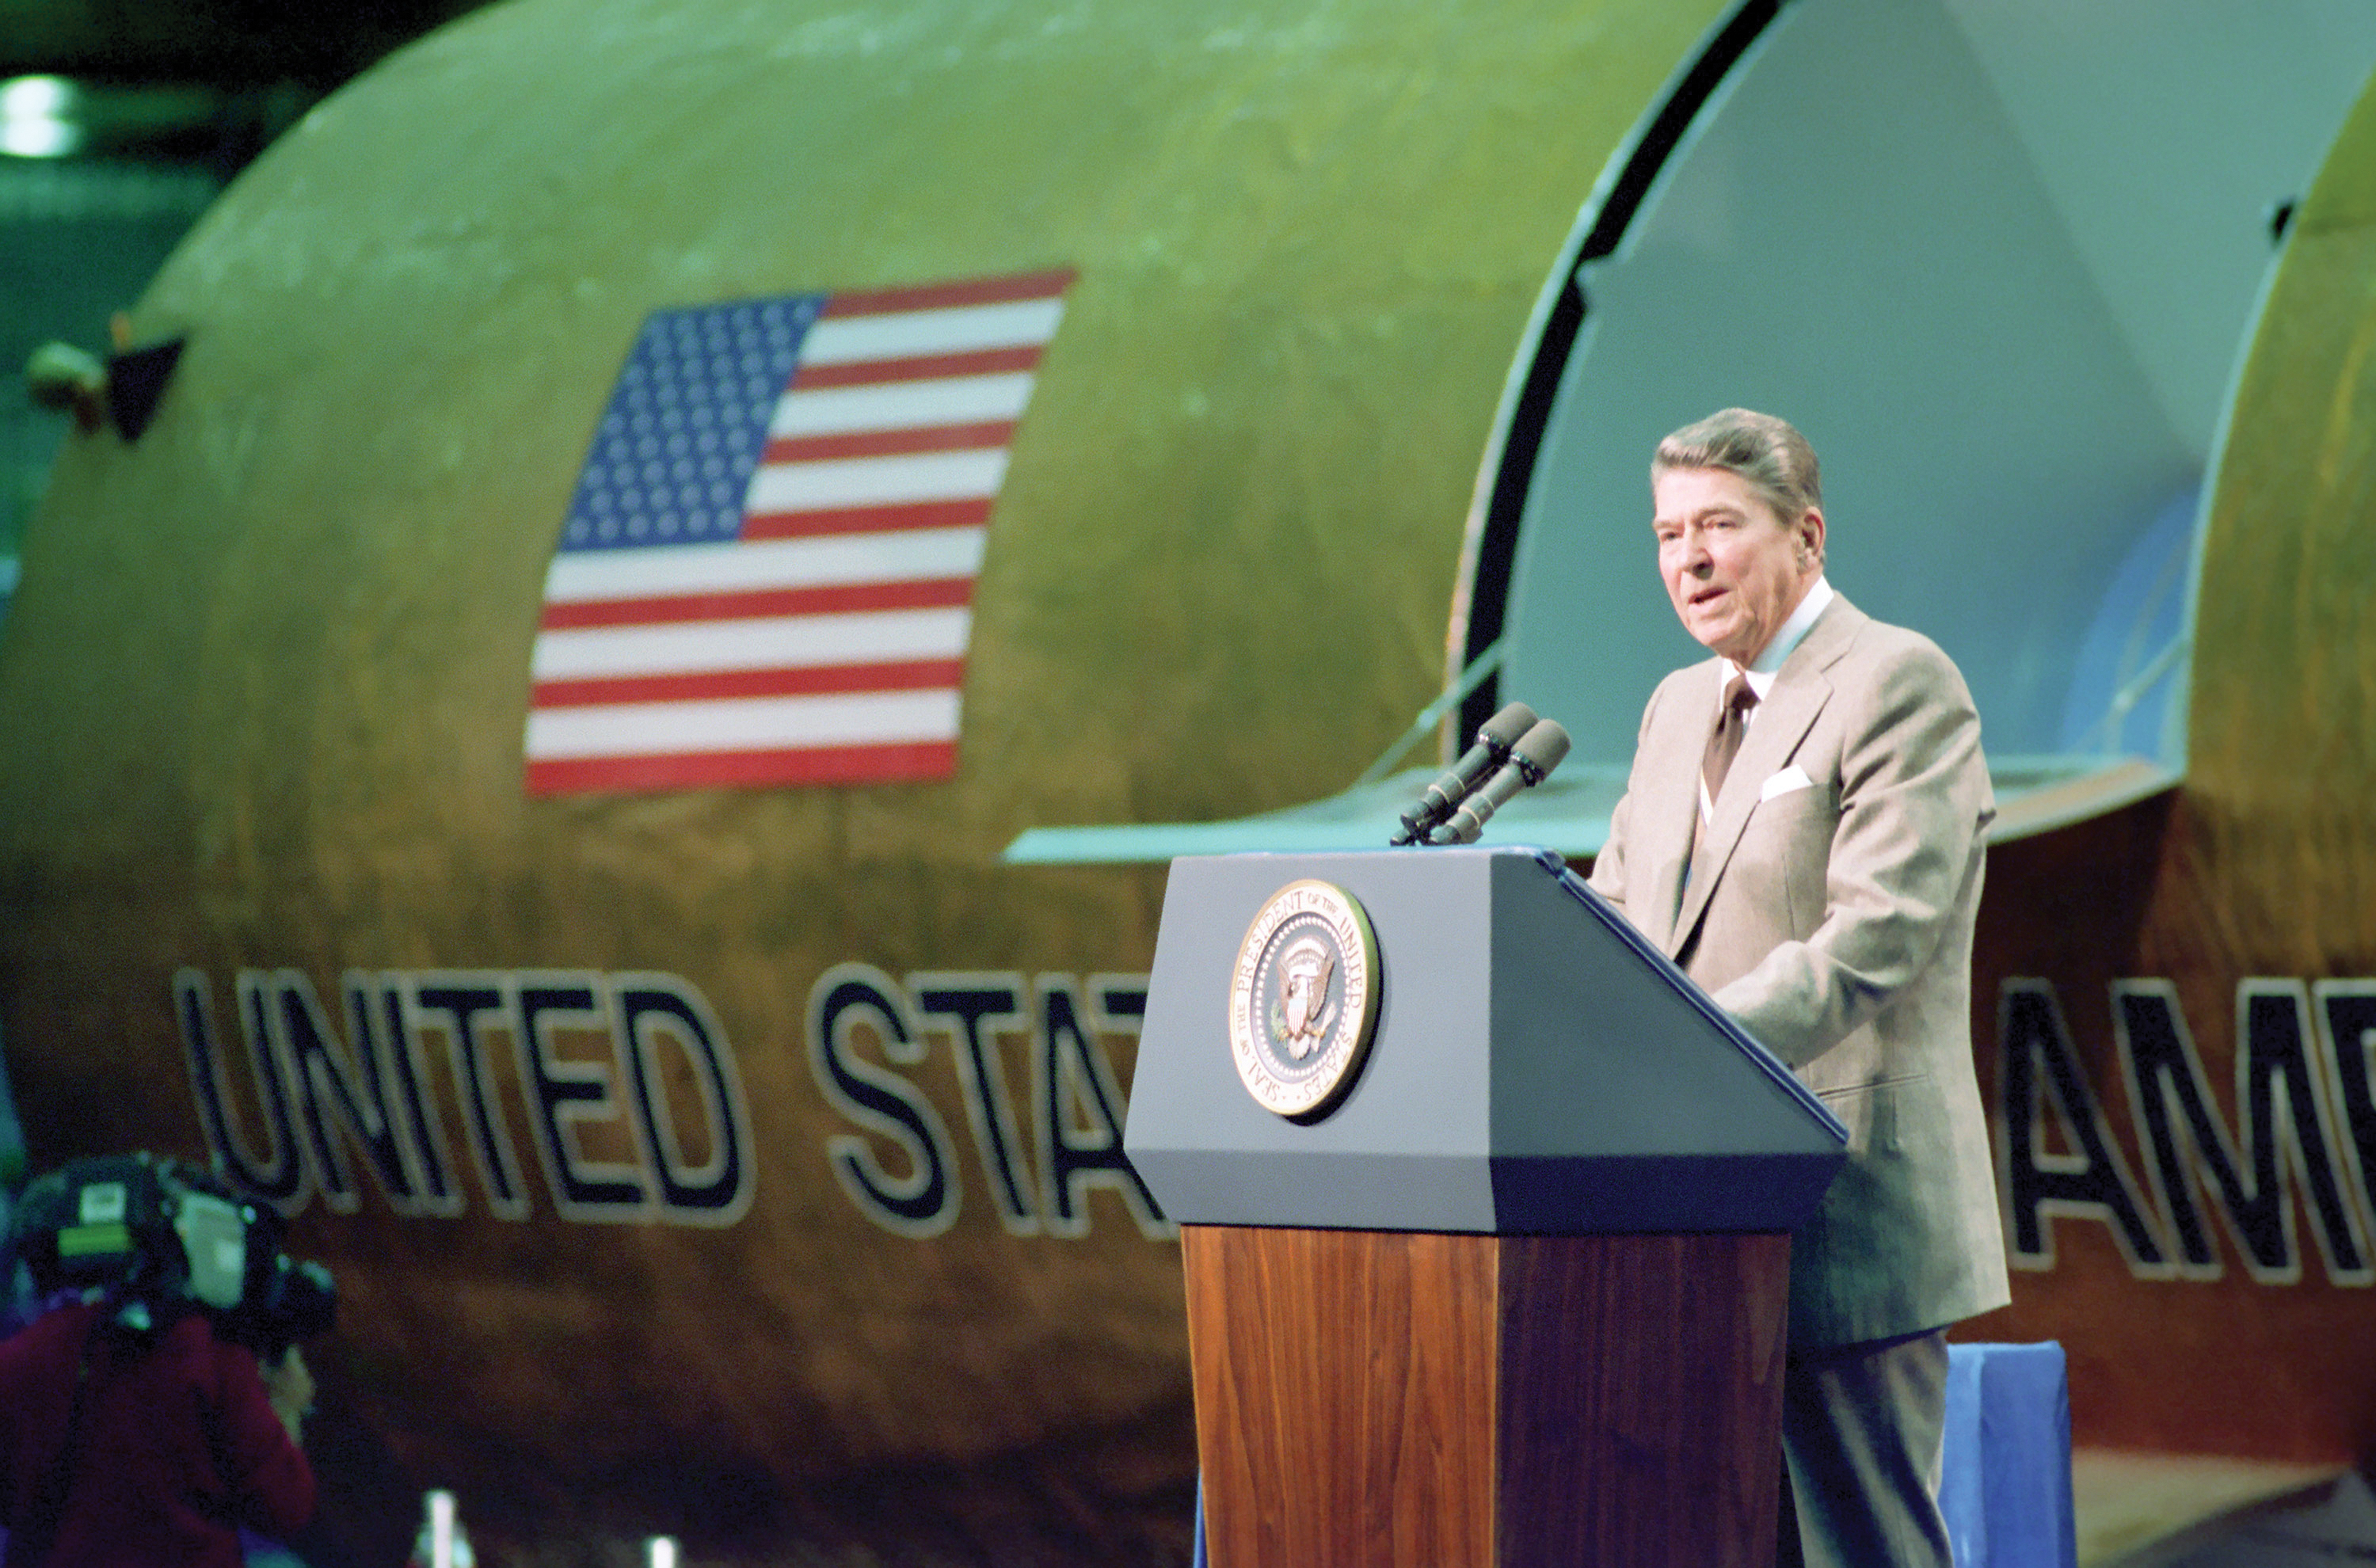 11/24/1987 President giving speech on SDI Strategic Defense Initiative at Martin Marrietta Astronautics in Waterton, Colorado